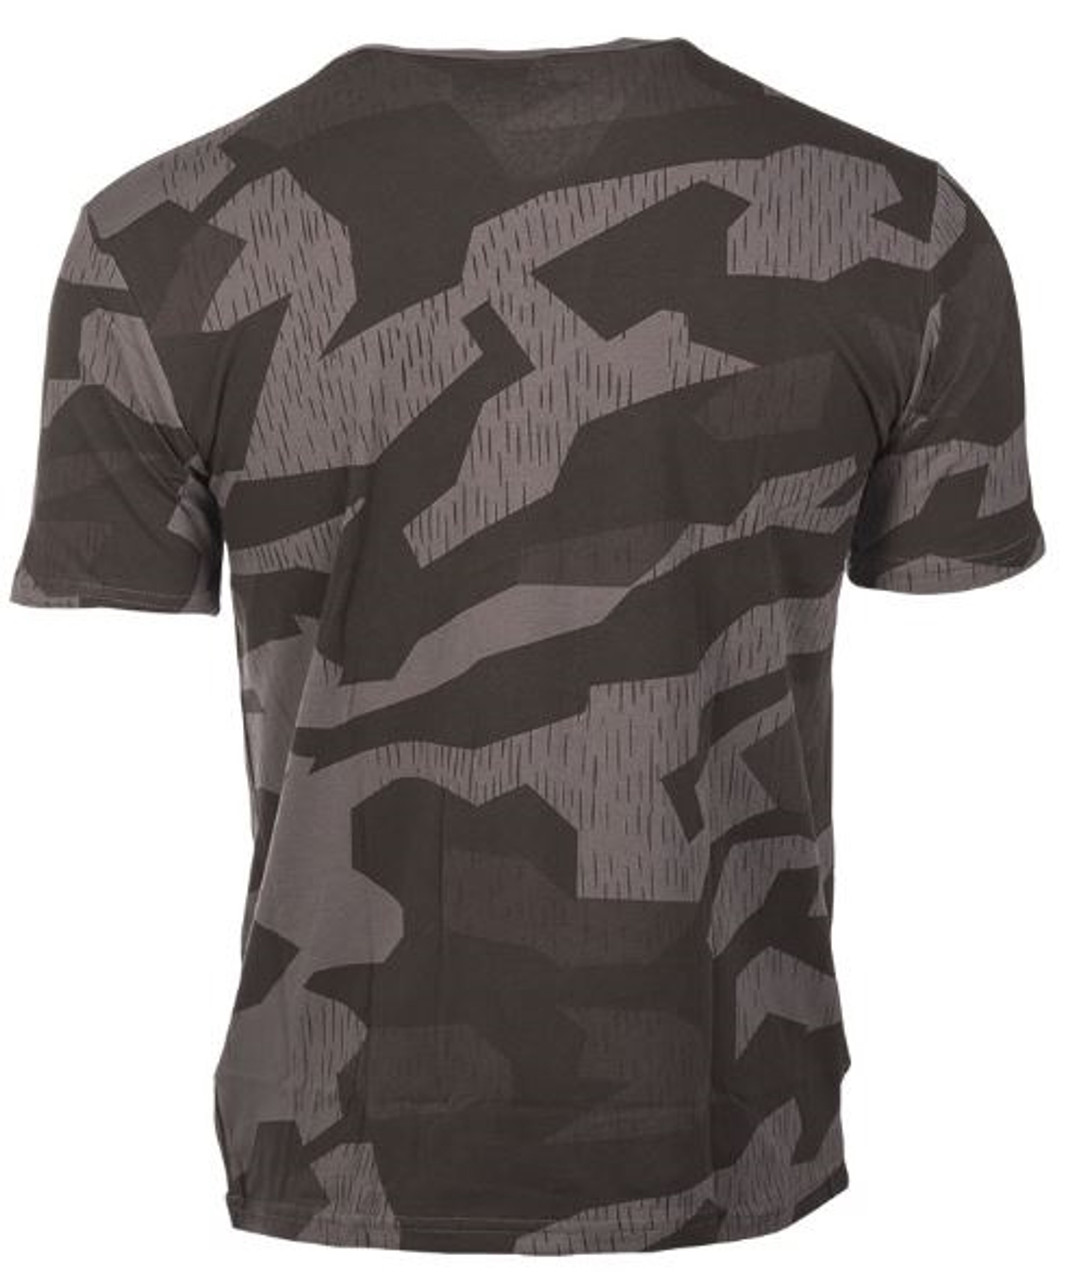 MIL-TEC 'Night' Splinter Camo T-shirt - NEW from Hessen Surplus